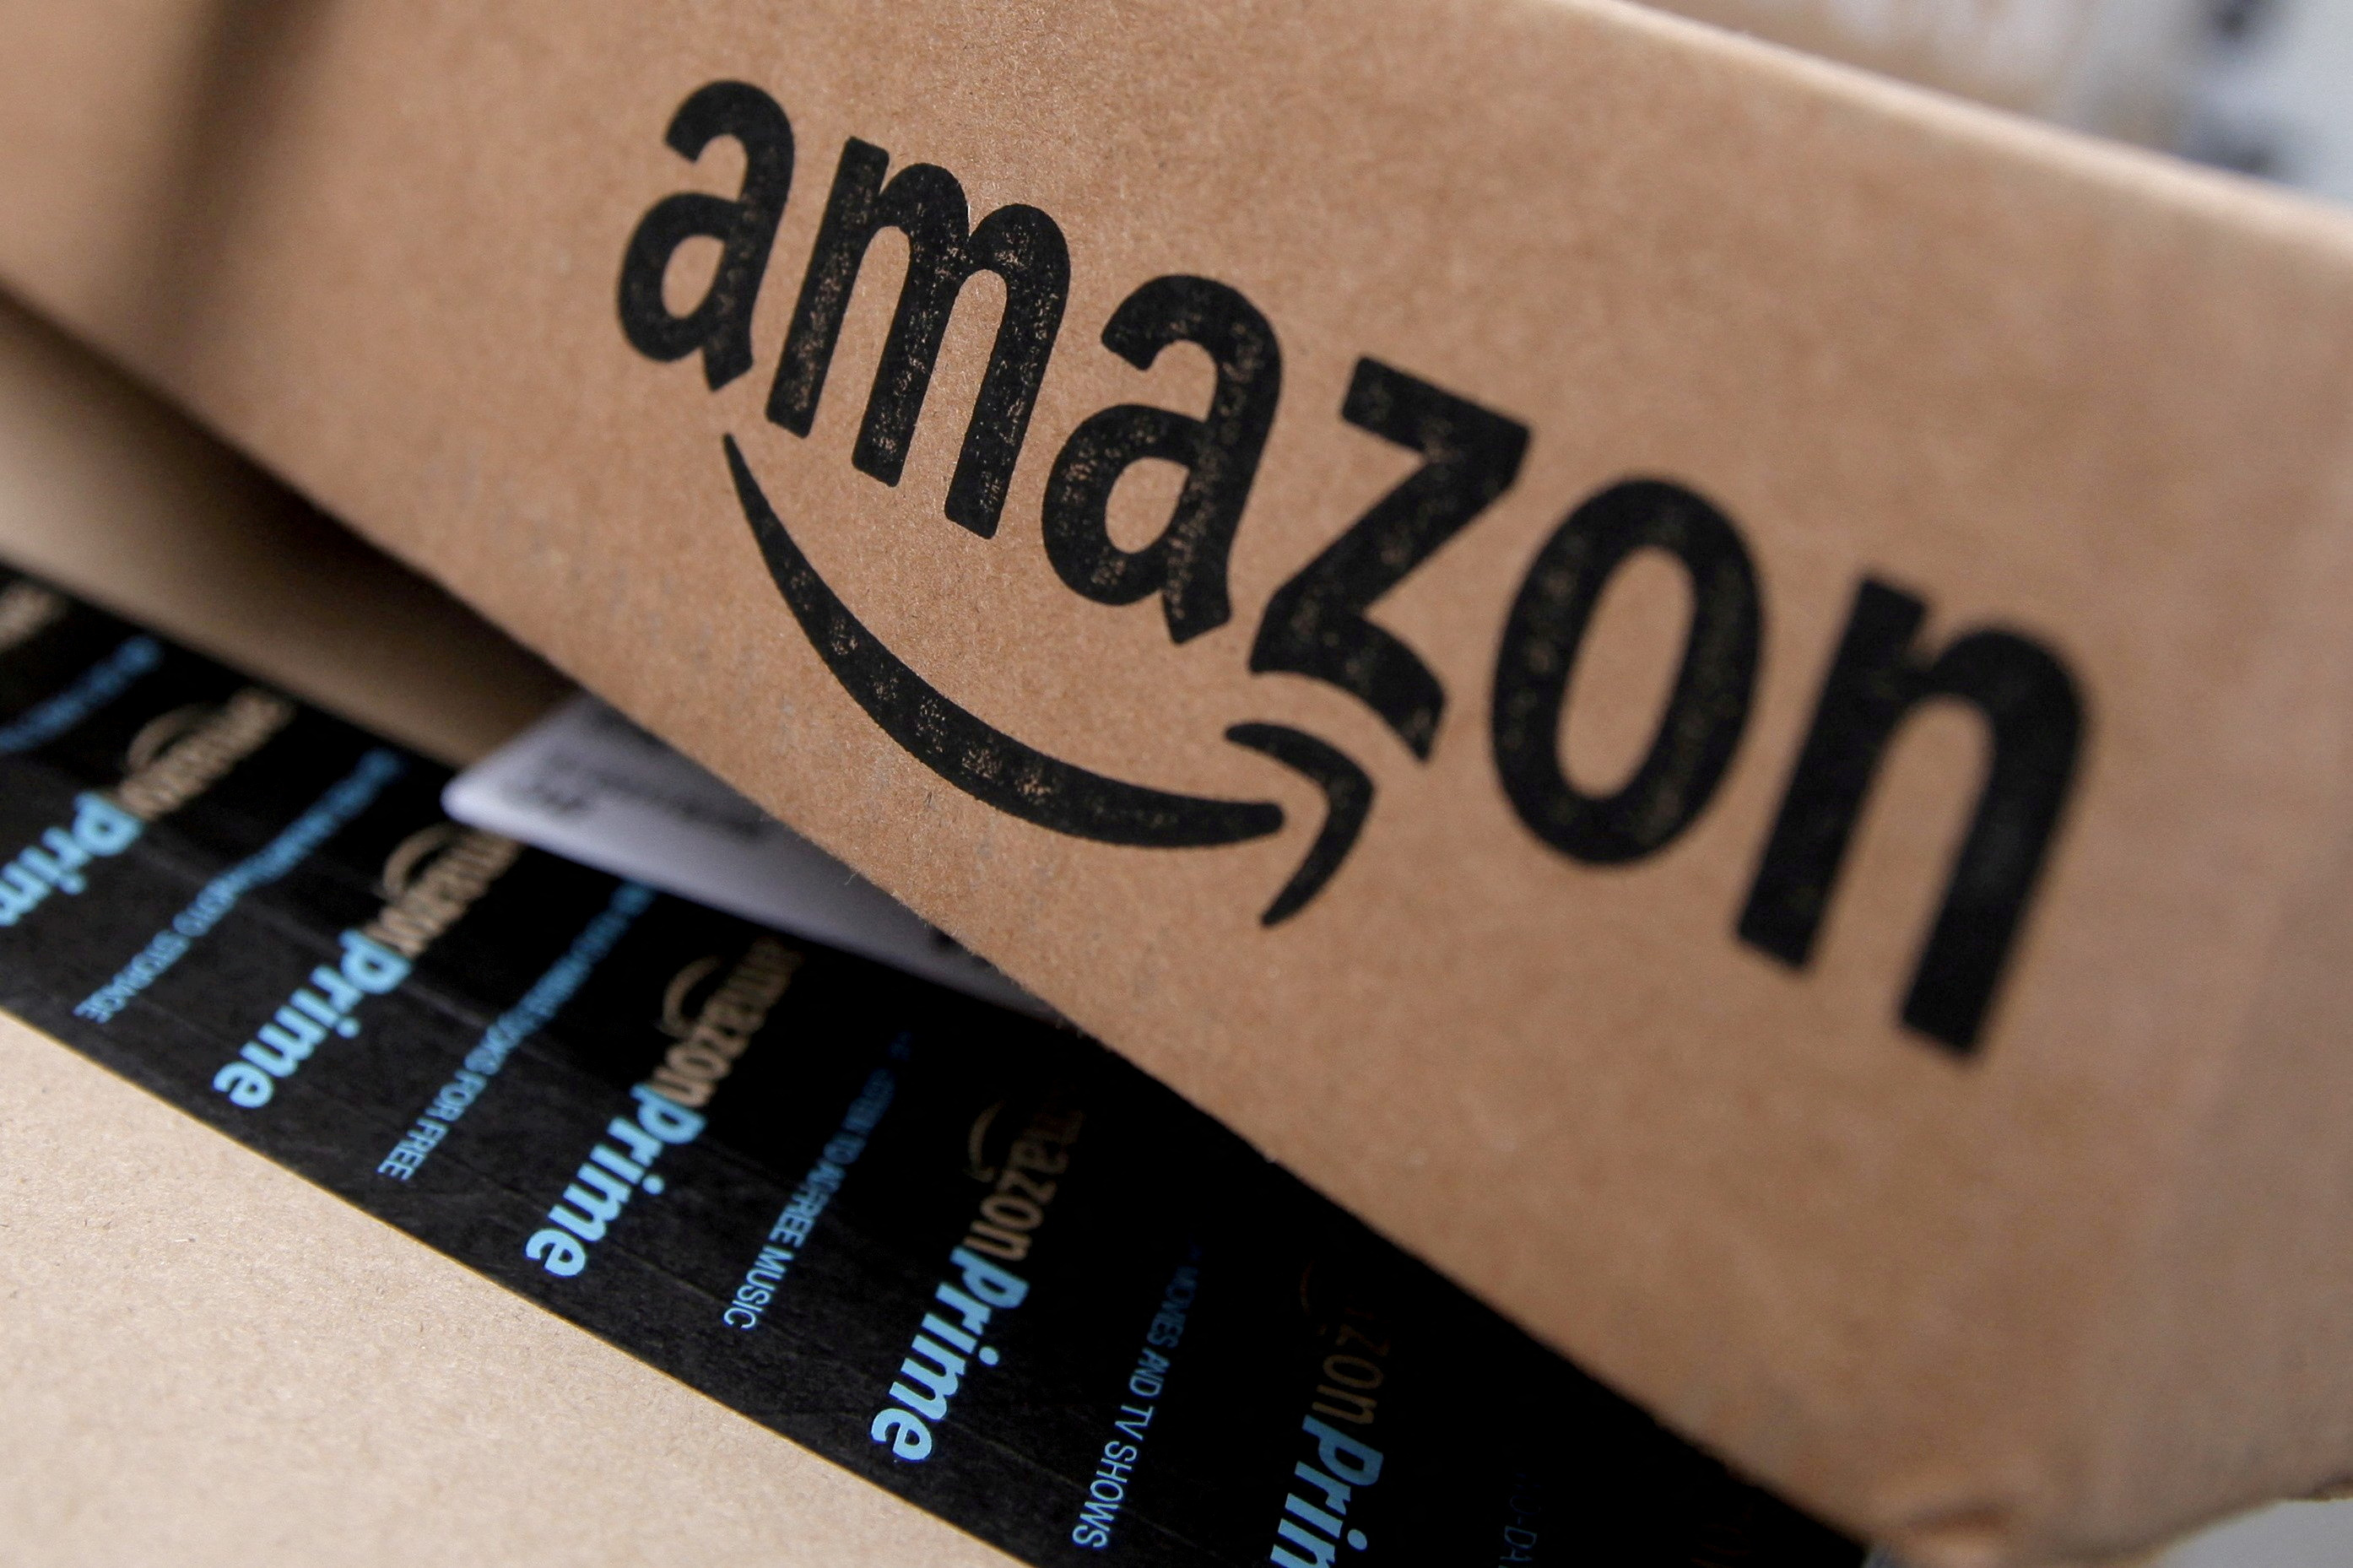 Amazon sees cloud decline in April, shares erase gains